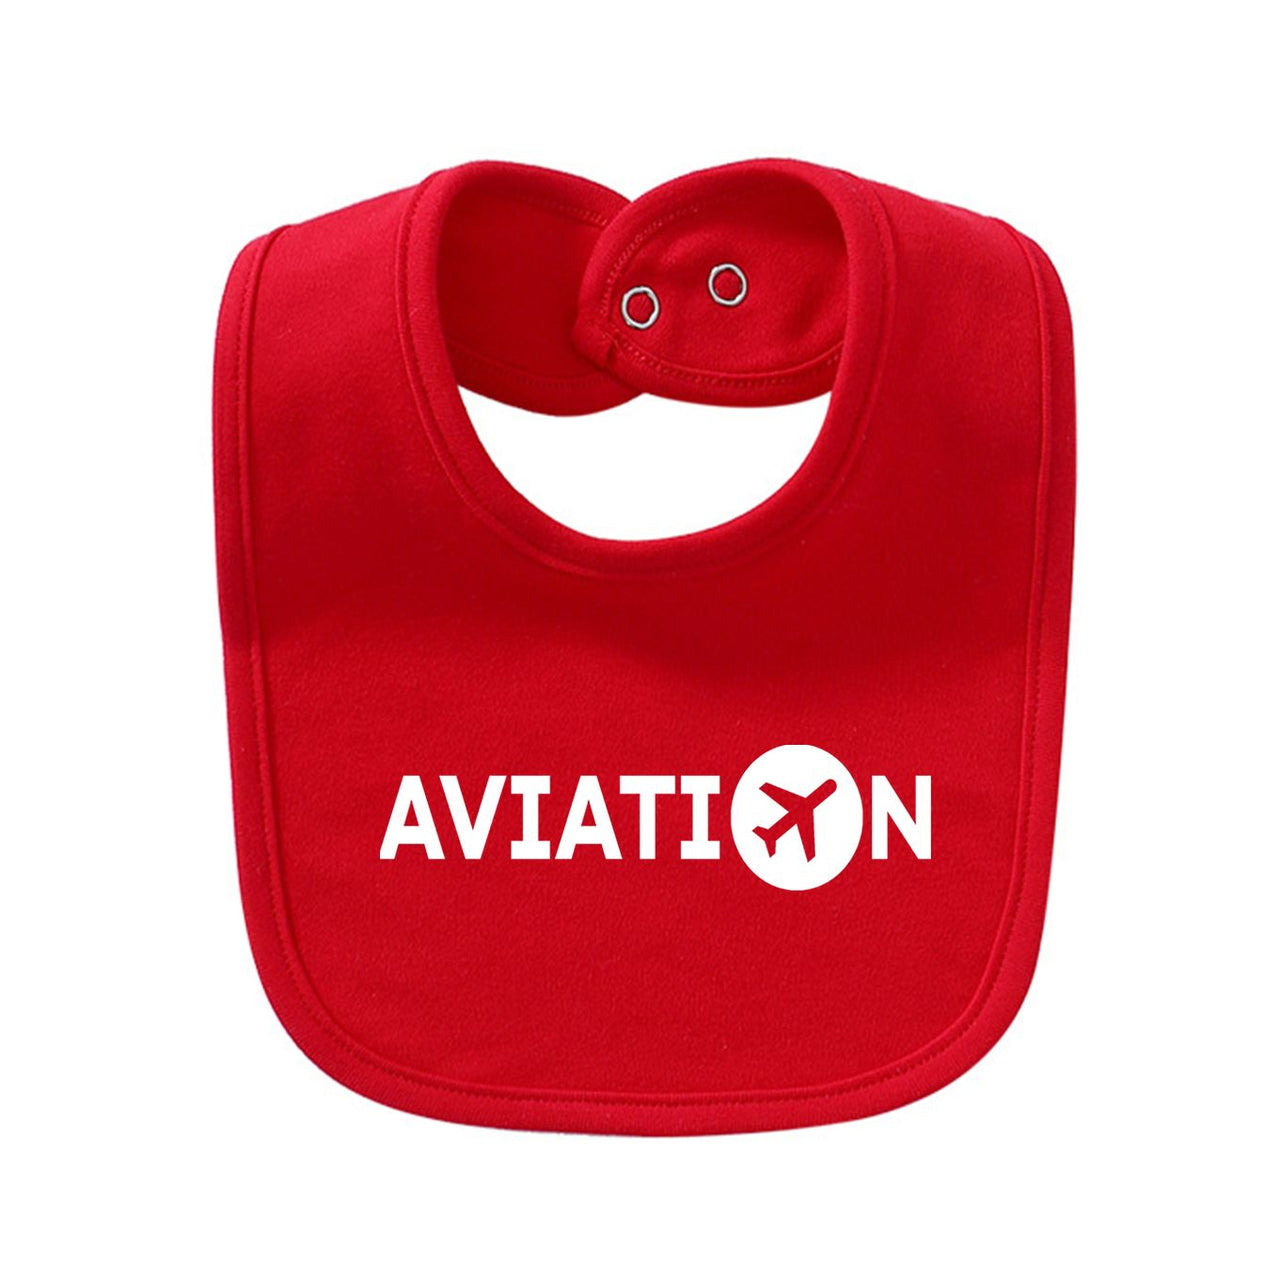 Aviation Designed Baby Saliva & Feeding Towels